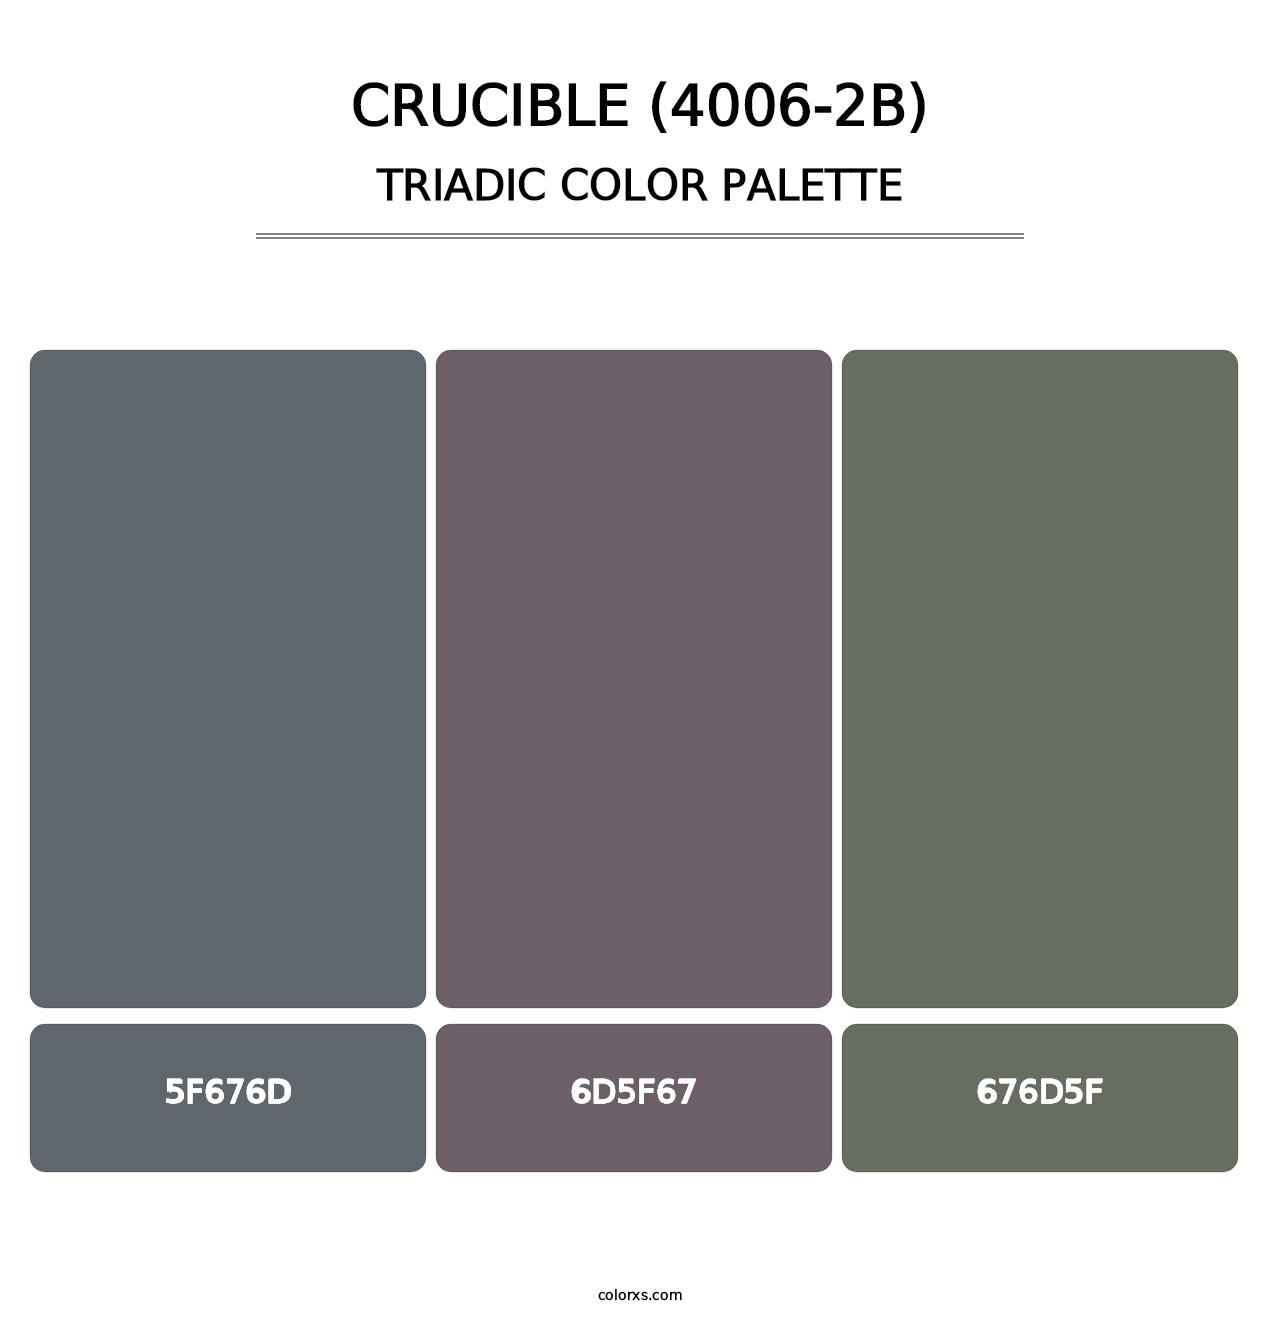 Crucible (4006-2B) - Triadic Color Palette